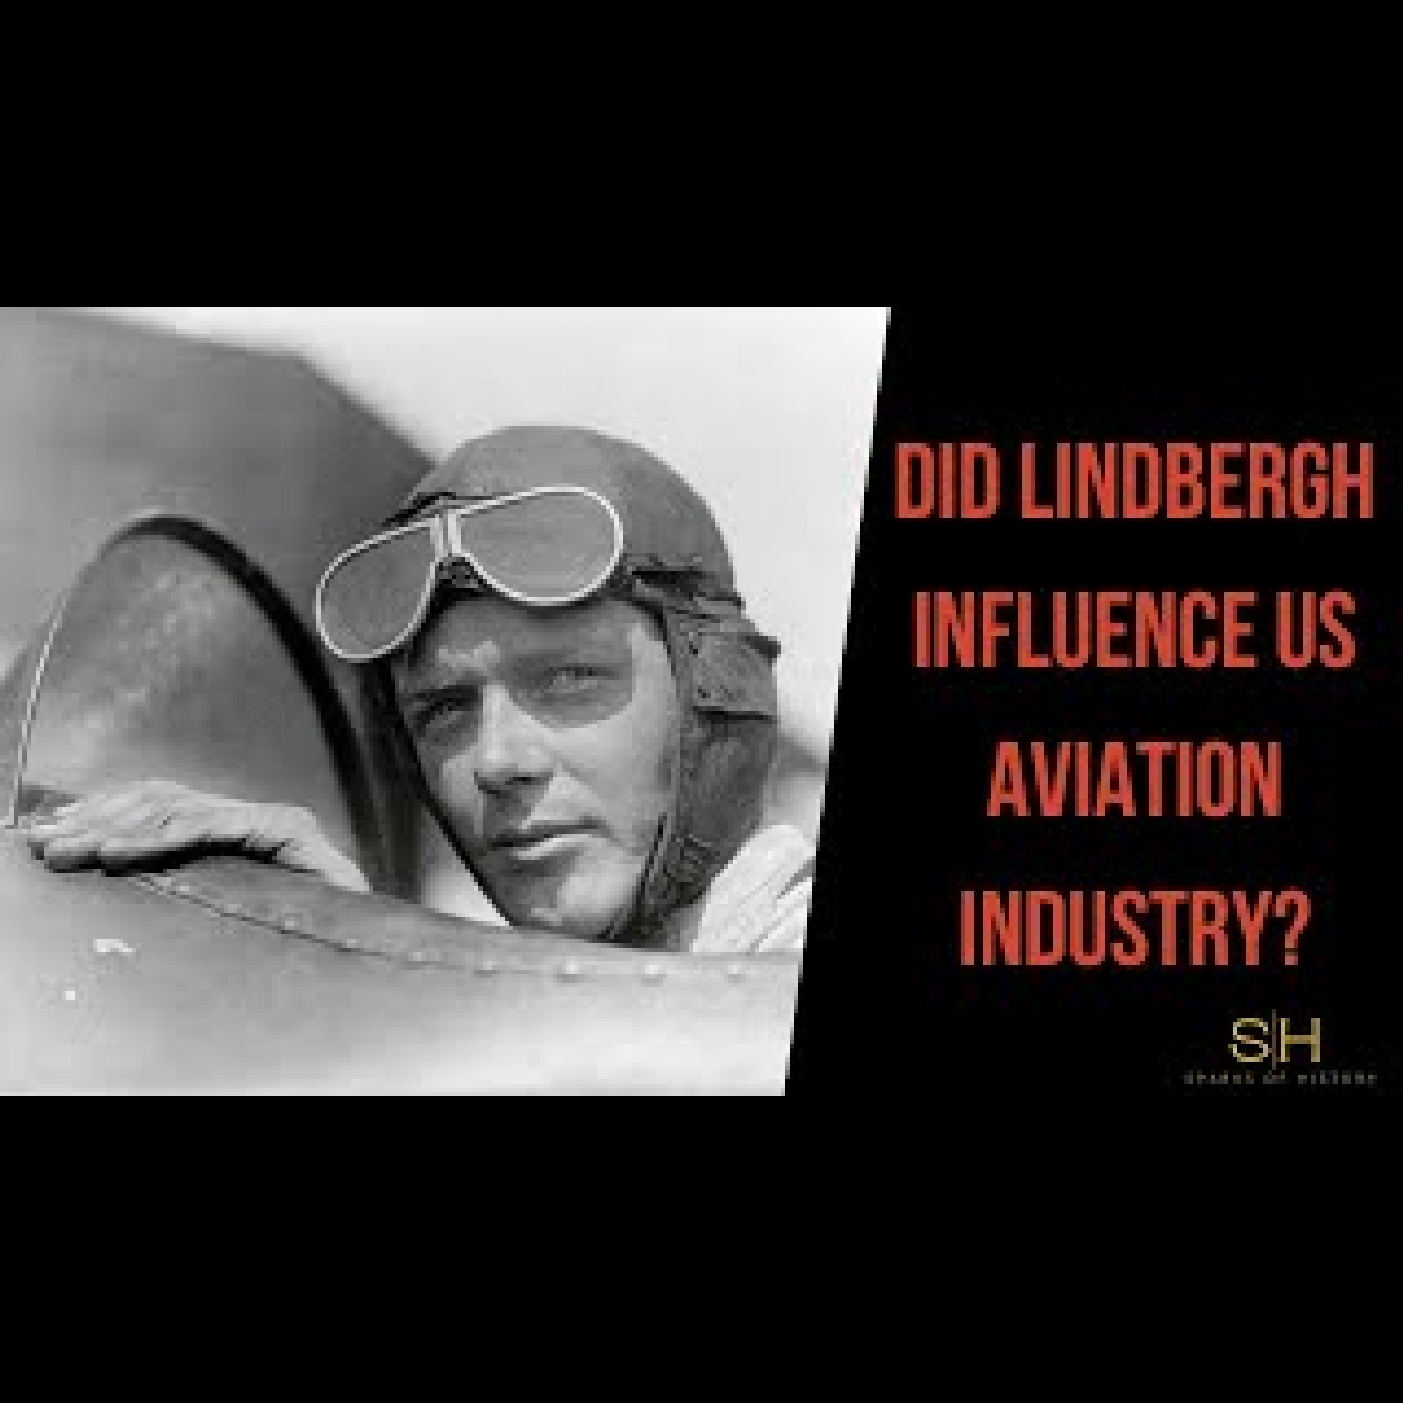 Charles Lindbergh #5 - Did Lindbergh influence US Aviation Industry?